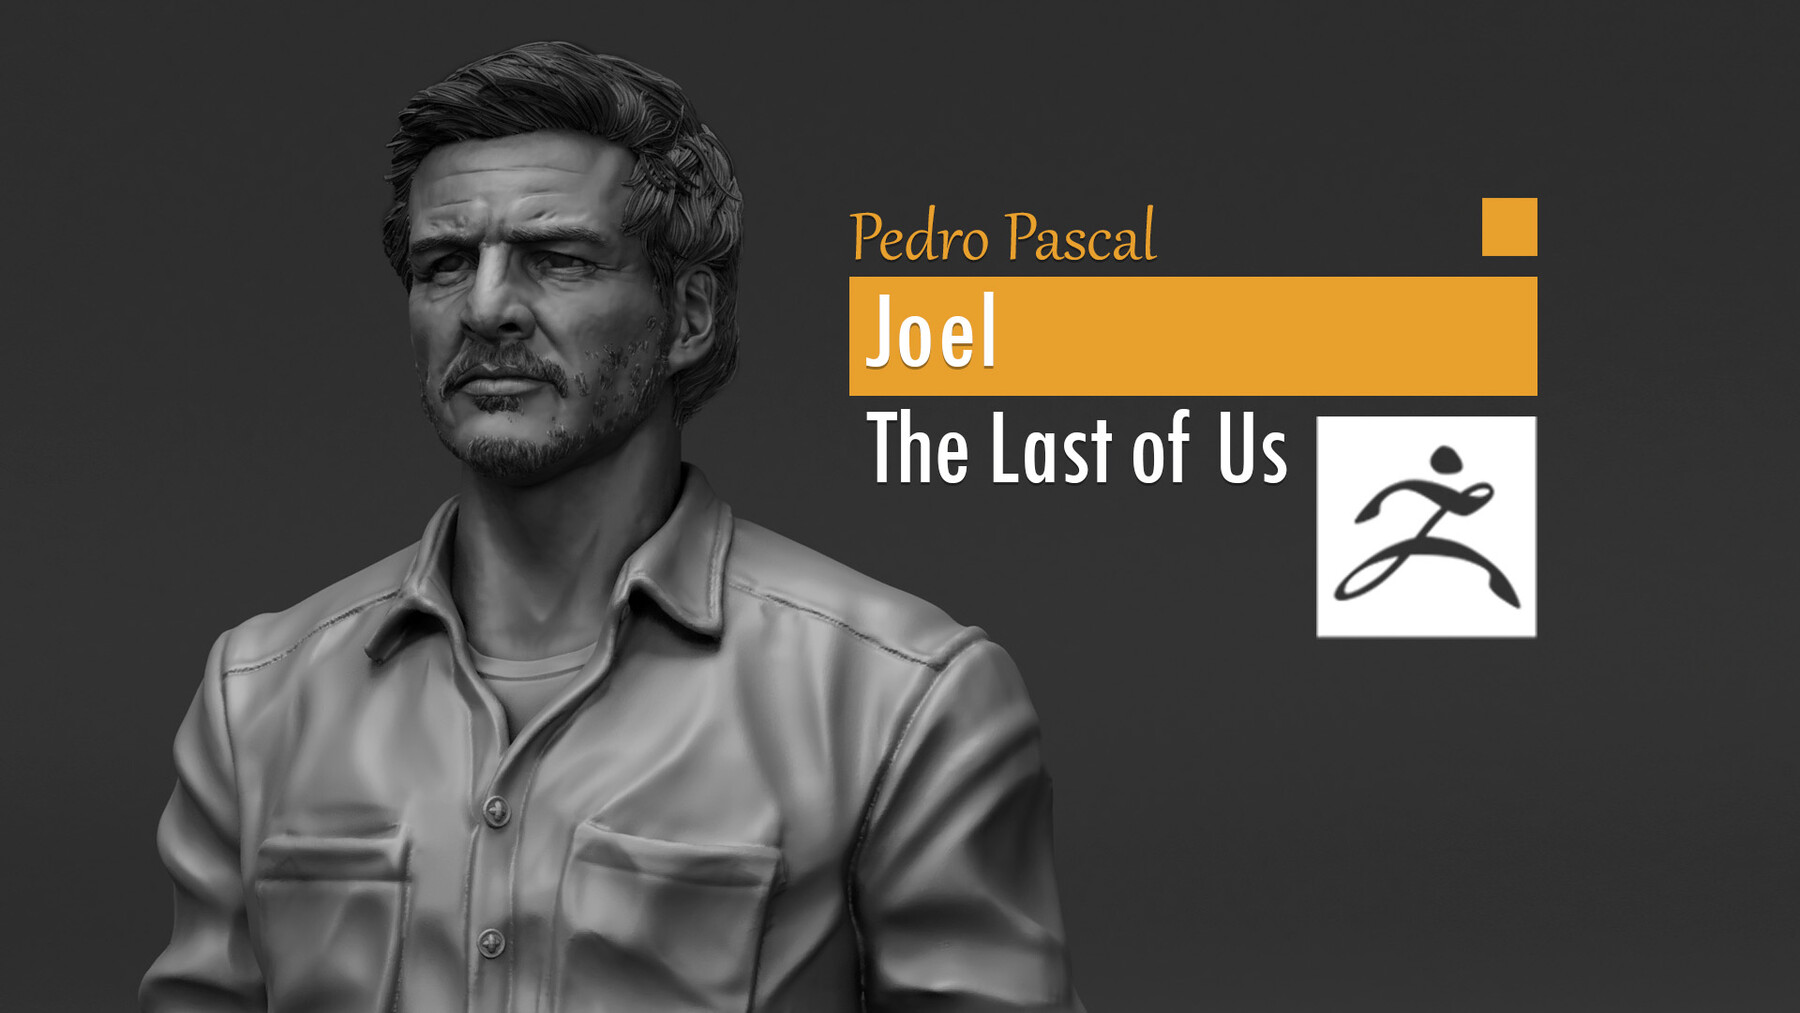 Pedro Pascal as Joel - The Last of us by FonsoTobar on DeviantArt